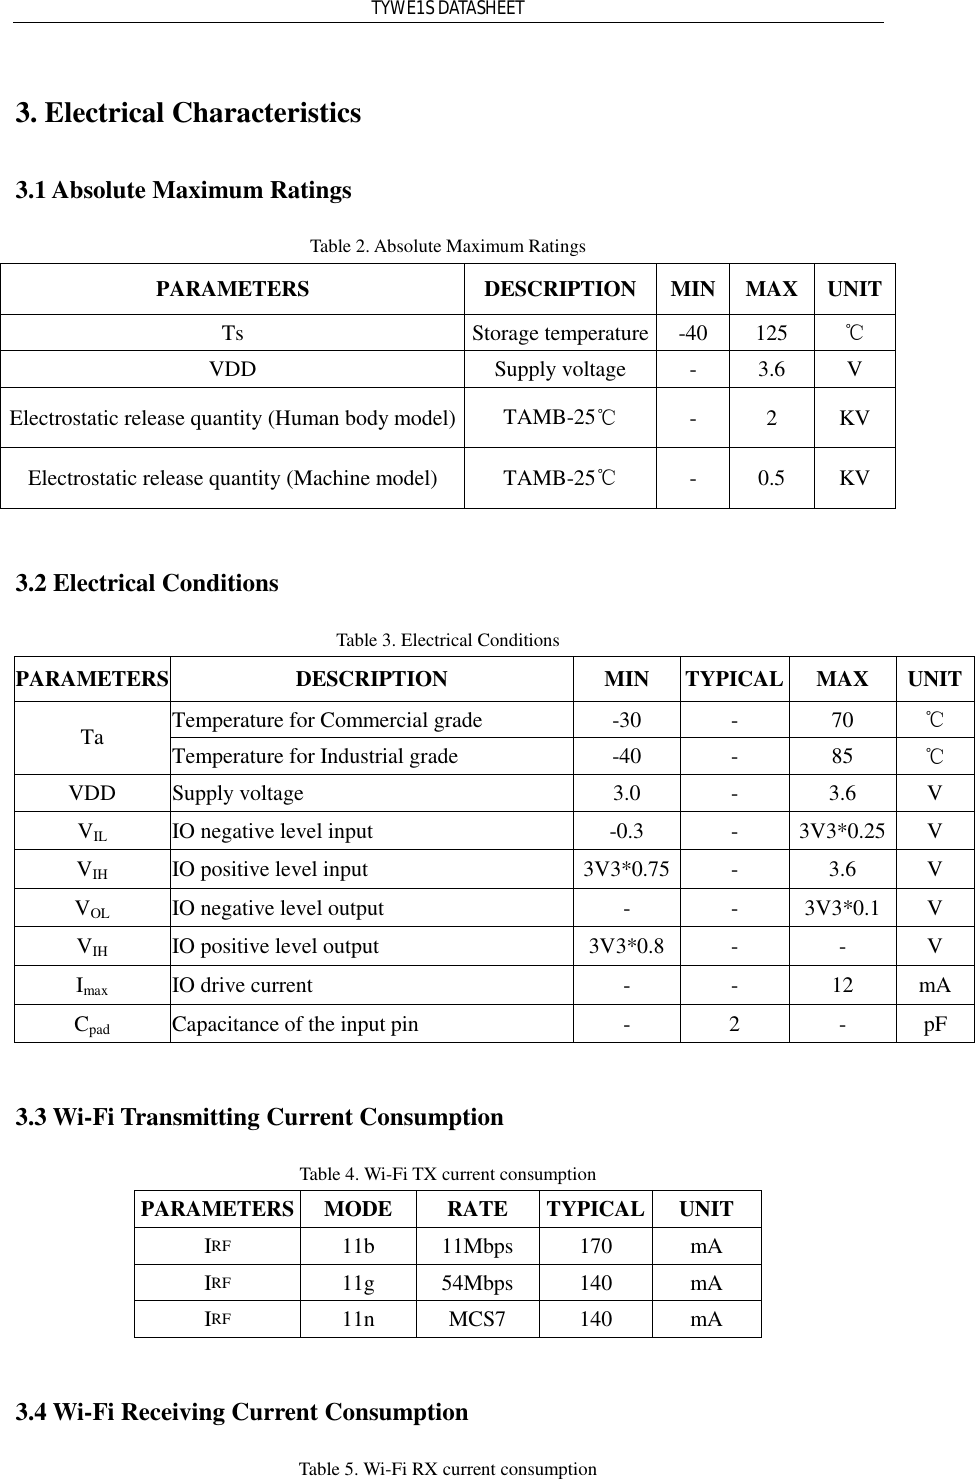 TYWE1S DATASHEET 3. Electrical Characteristics 3.1 Absolute Maximum Ratings Table 2. Absolute Maximum Ratings PARAMETERS  DESCRIPTION MIN MAX UNIT Ts  Storage temperature -40  125  ℃ VDD  Supply voltage  -  3.6  V Electrostatic release quantity (Human body model) TAMB-25℃ -  2  KV Electrostatic release quantity (Machine model)  TAMB-25℃ -  0.5  KV  3.2 Electrical Conditions Table 3. Electrical Conditions  PARAMETERS DESCRIPTION  MIN  TYPICAL MAX  UNIT Temperature for Commercial grade  -30  -  70  ℃ Ta  Temperature for Industrial grade  -40  -  85  ℃ VDD  Supply voltage  3.0  -  3.6  V VIL IO negative level input  -0.3  -  3V3*0.25 V VIH IO positive level input  3V3*0.75 -  3.6  V VOL IO negative level output  -  -  3V3*0.1 V VIH IO positive level output  3V3*0.8 -  -  V Imax IO drive current  -  -  12  mA Cpad  Capacitance of the input pin  -  2  -  pF  3.3 Wi-Fi Transmitting Current Consumption Table 4. Wi-Fi TX current consumption PARAMETERS MODE  RATE  TYPICAL UNIT IRF 11b  11Mbps  170  mA IRF 11g  54Mbps  140  mA IRF 11n  MCS7  140  mA  3.4 Wi-Fi Receiving Current Consumption Table 5. Wi-Fi RX current consumption 